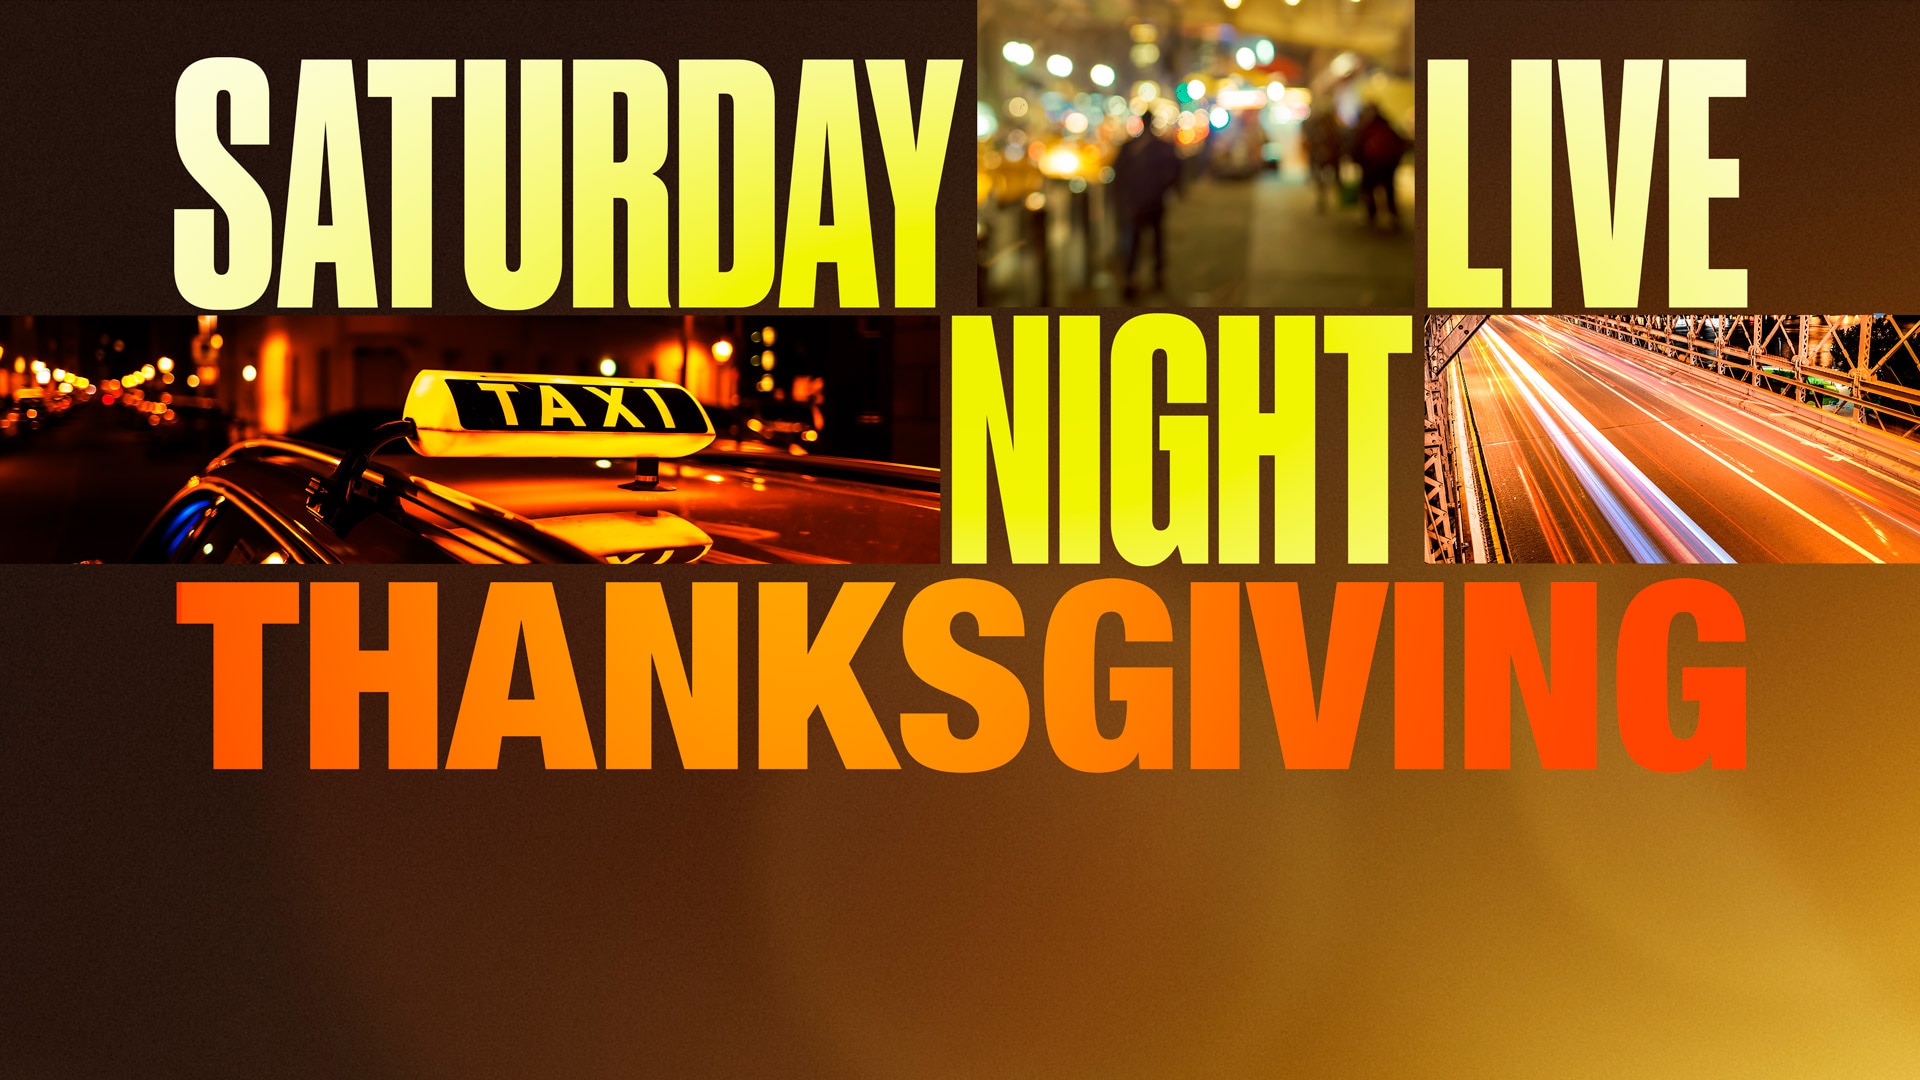 Watch Saturday Night Live Episode: A Saturday Night Live Thanksgiving -  NBC.com